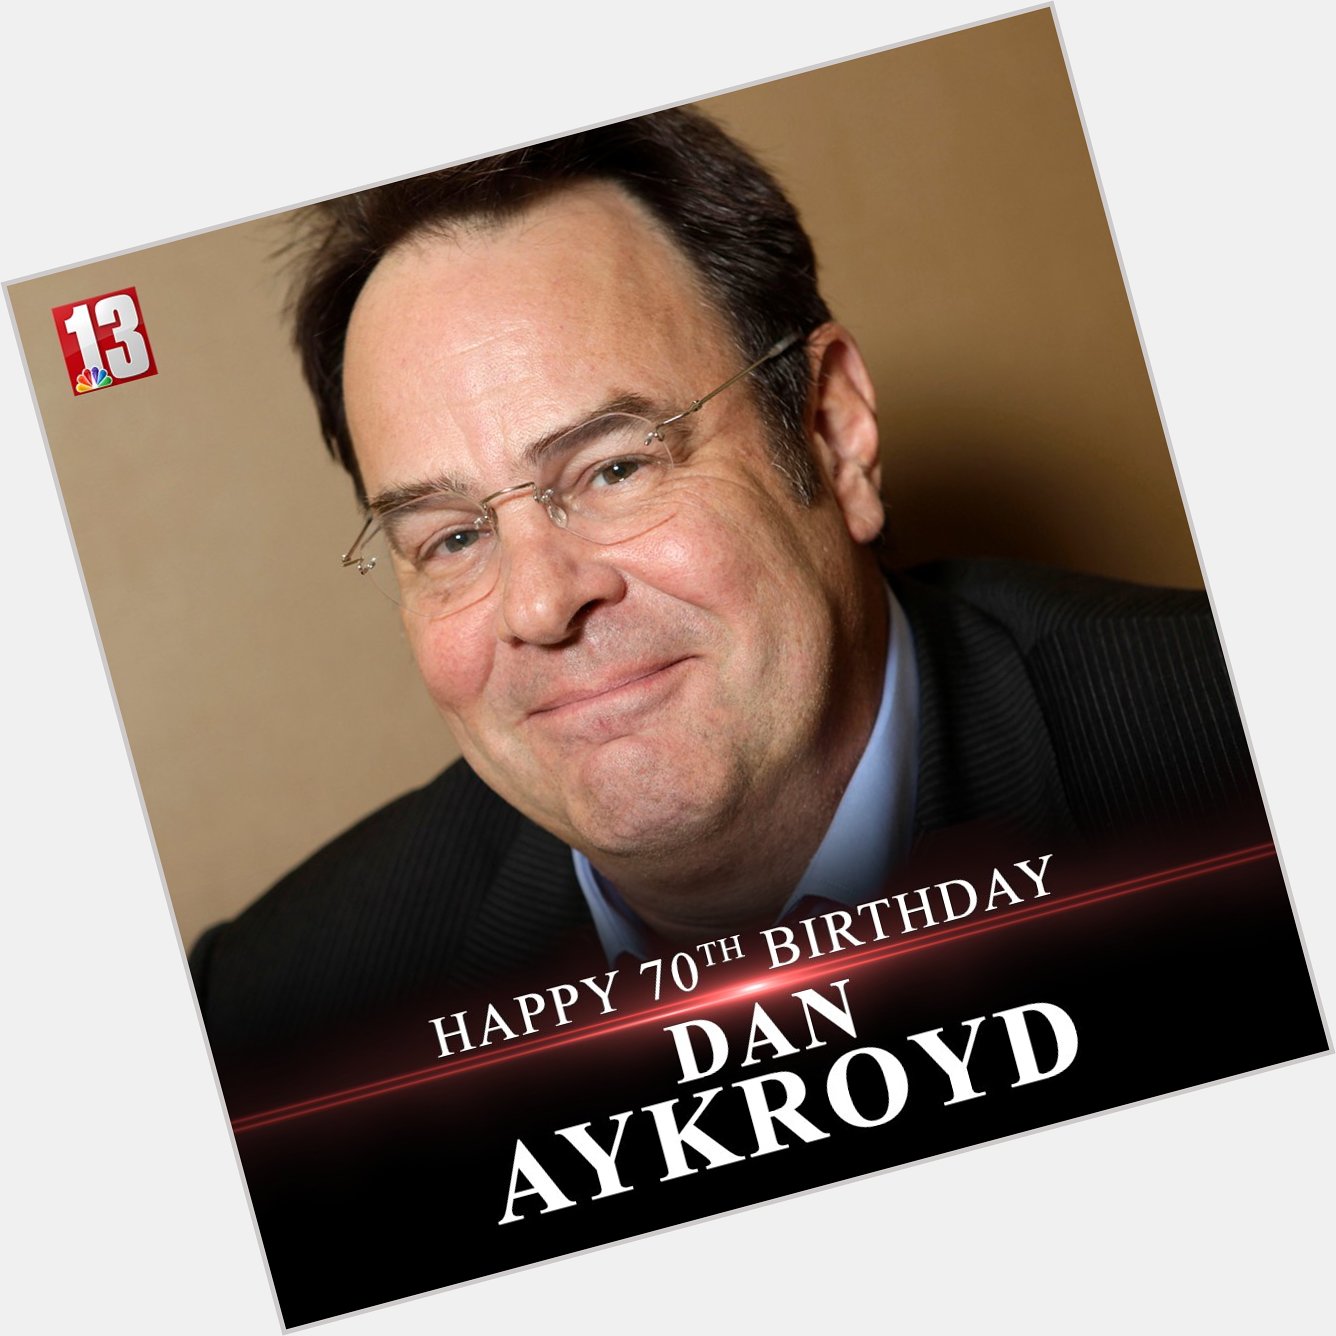   HAPPY BIRTHDAY! The legendary Dan_Aykroyd is *70* today! What s your favorite movie or TV show he s been in? 